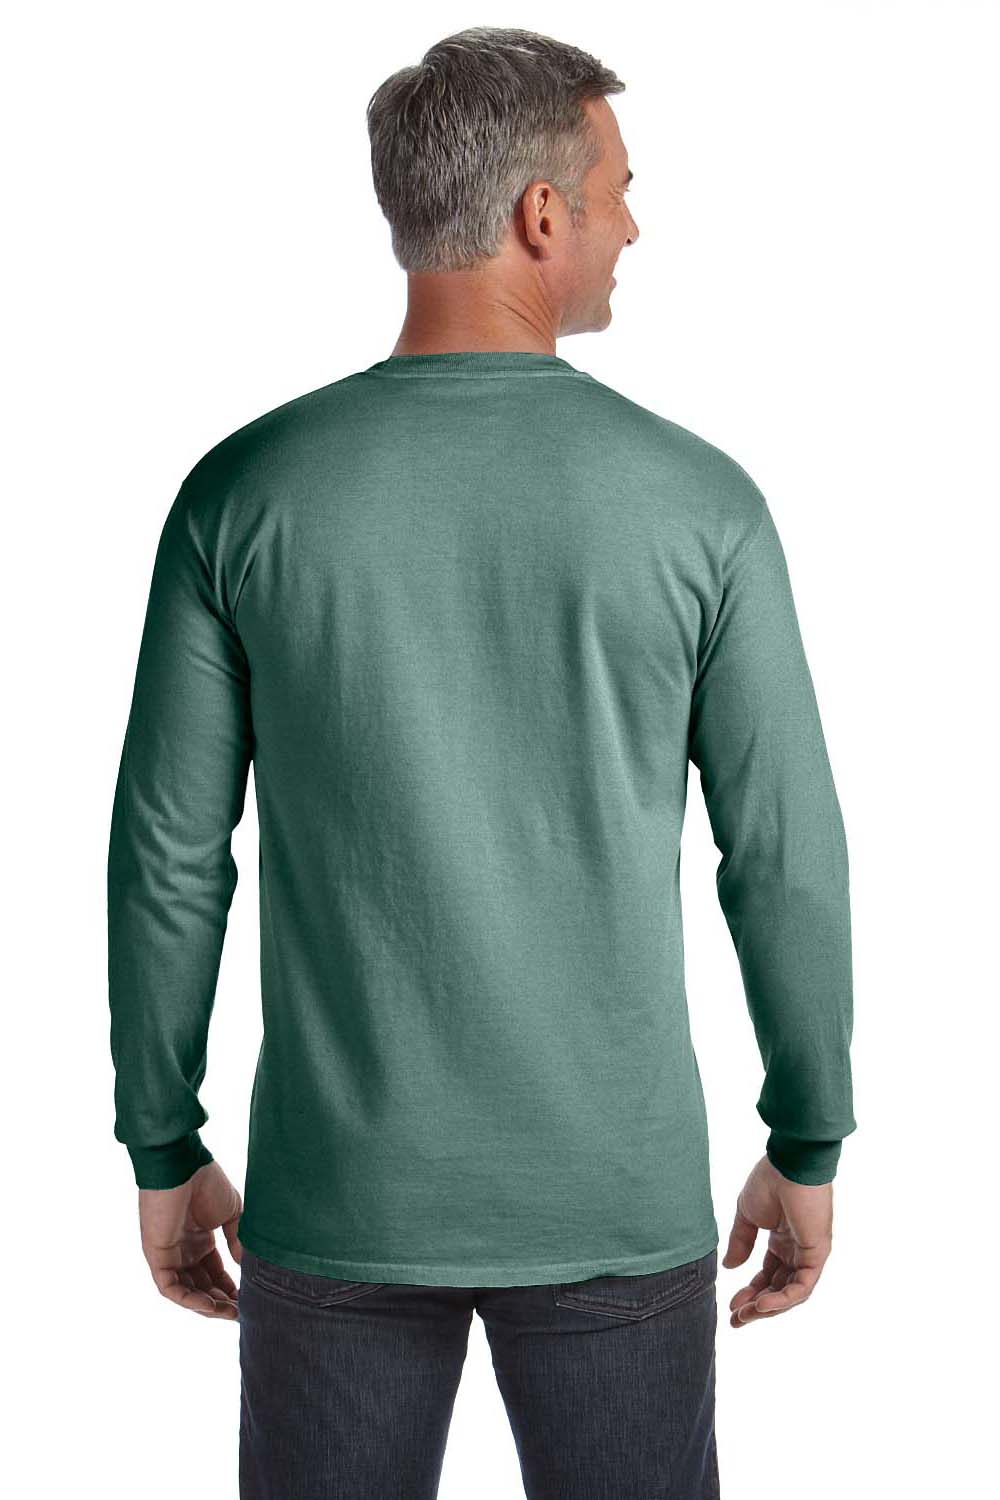 Comfort Colors C4410 Mens Long Sleeve Crewneck T-Shirt w/ Pocket Light Green Back